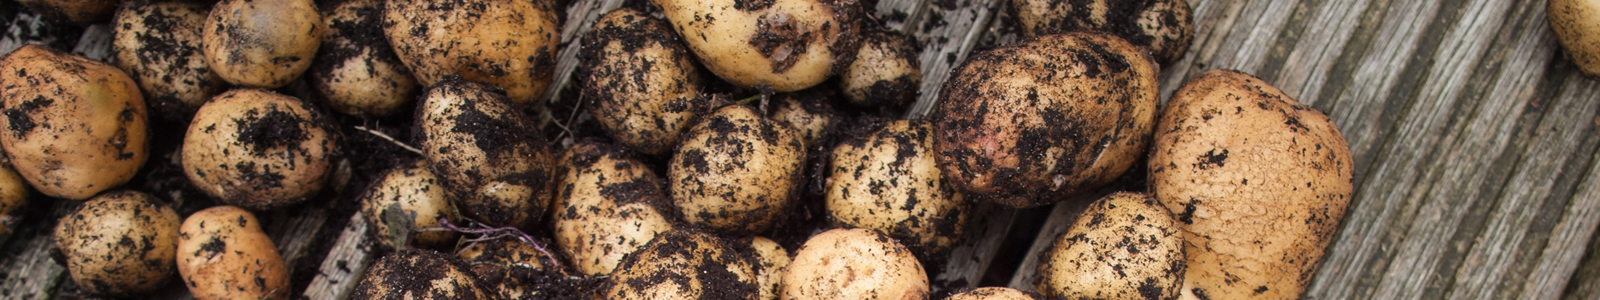 potato fertiliser